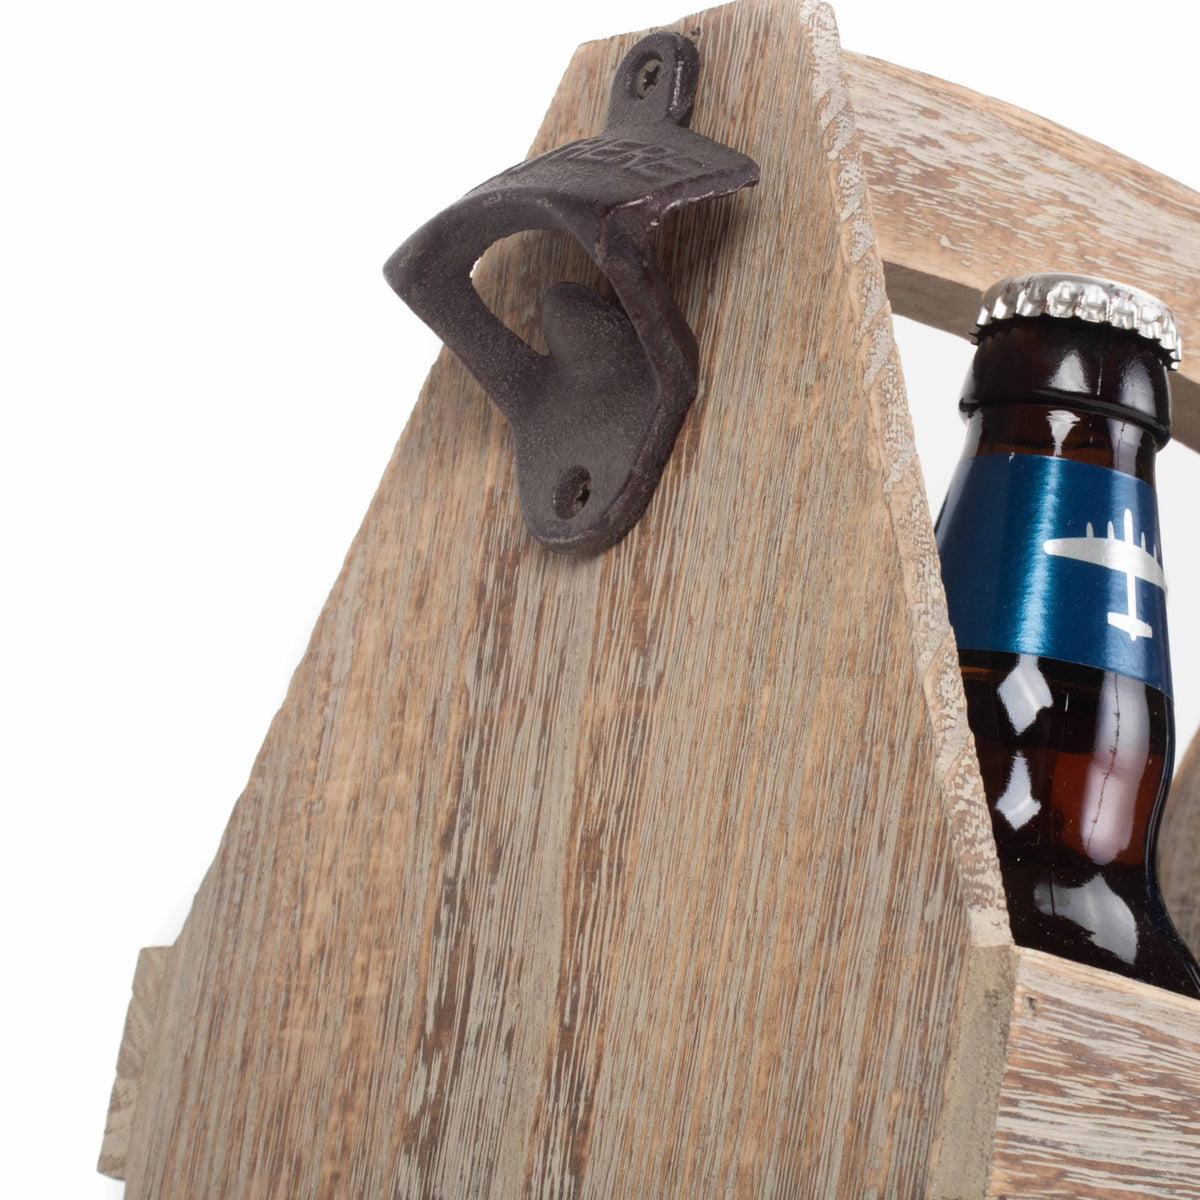 Oak Effect 4 Beer Bottle Carrier with Bottle Opener